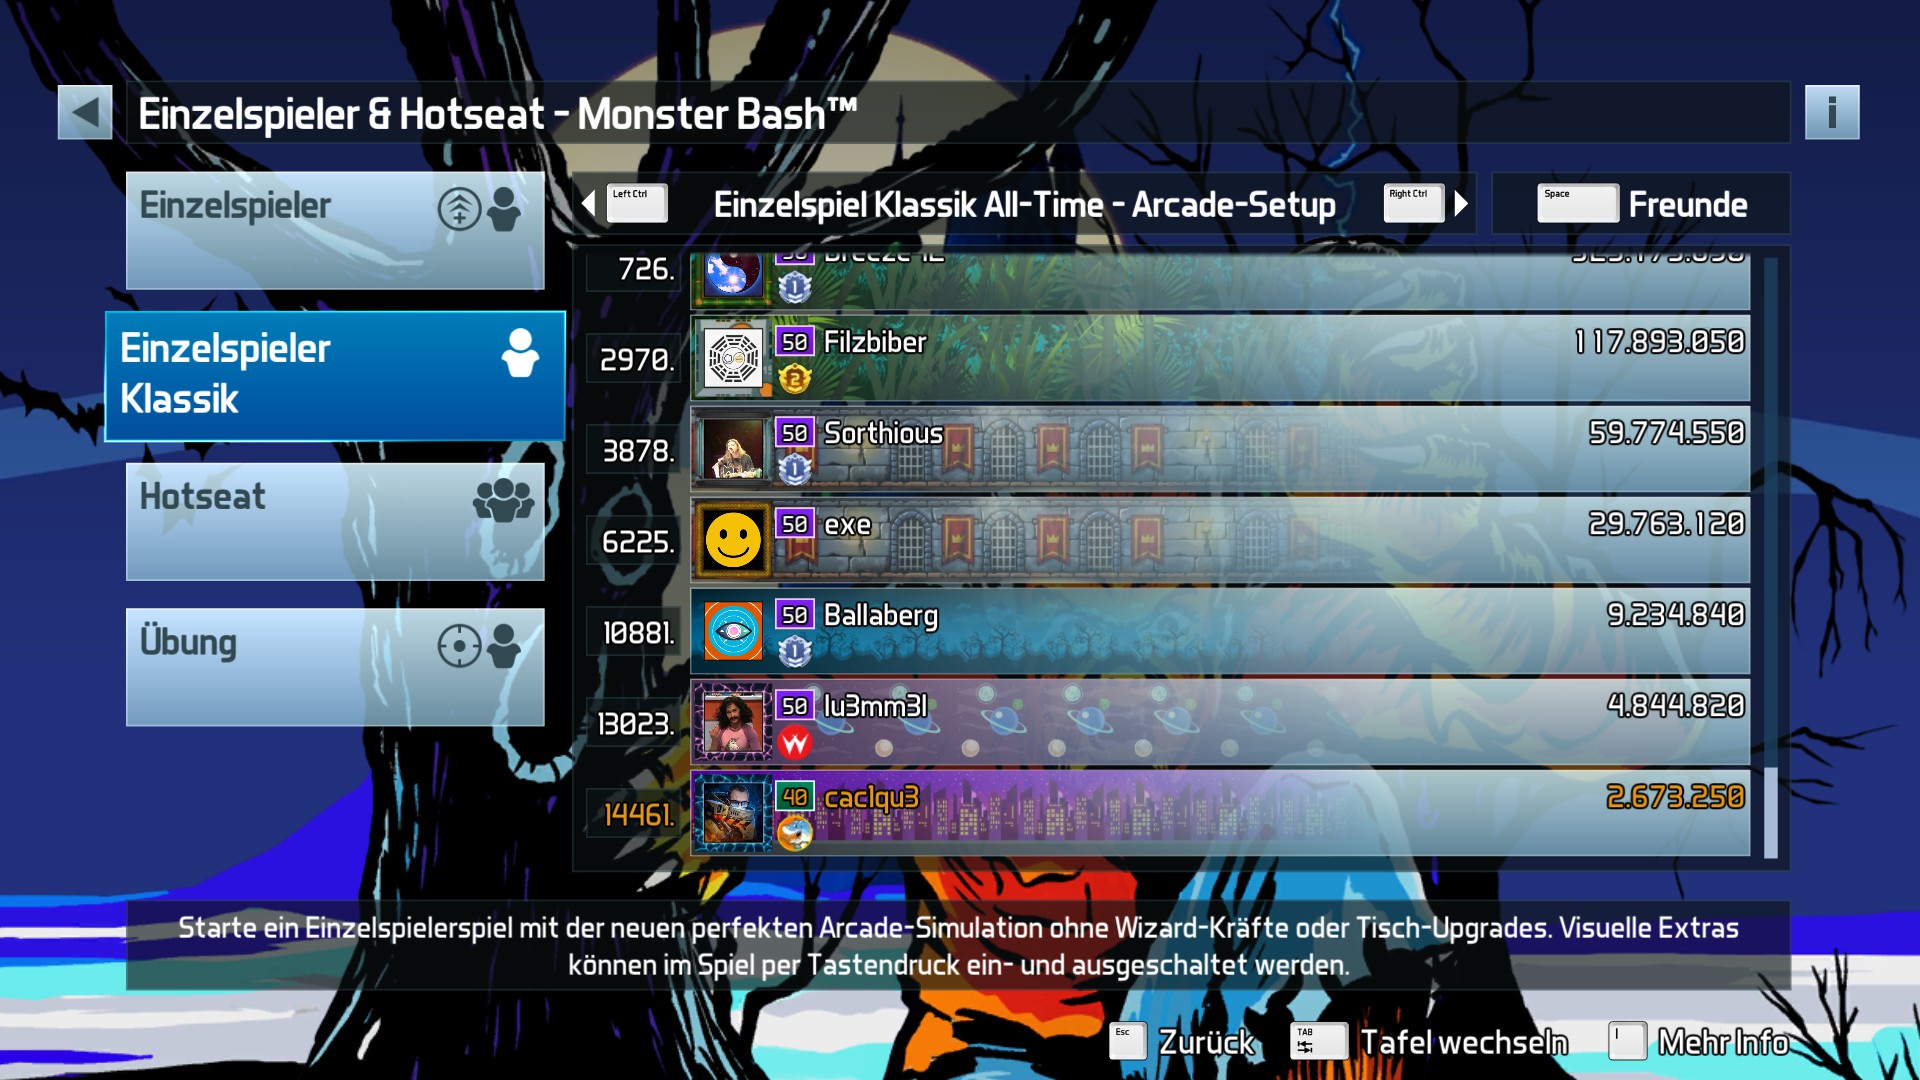 e2e4: Pinball FX3: Monster Bash [Arcade] (PC) 2,673,250 points on 2022-05-17 18:33:30